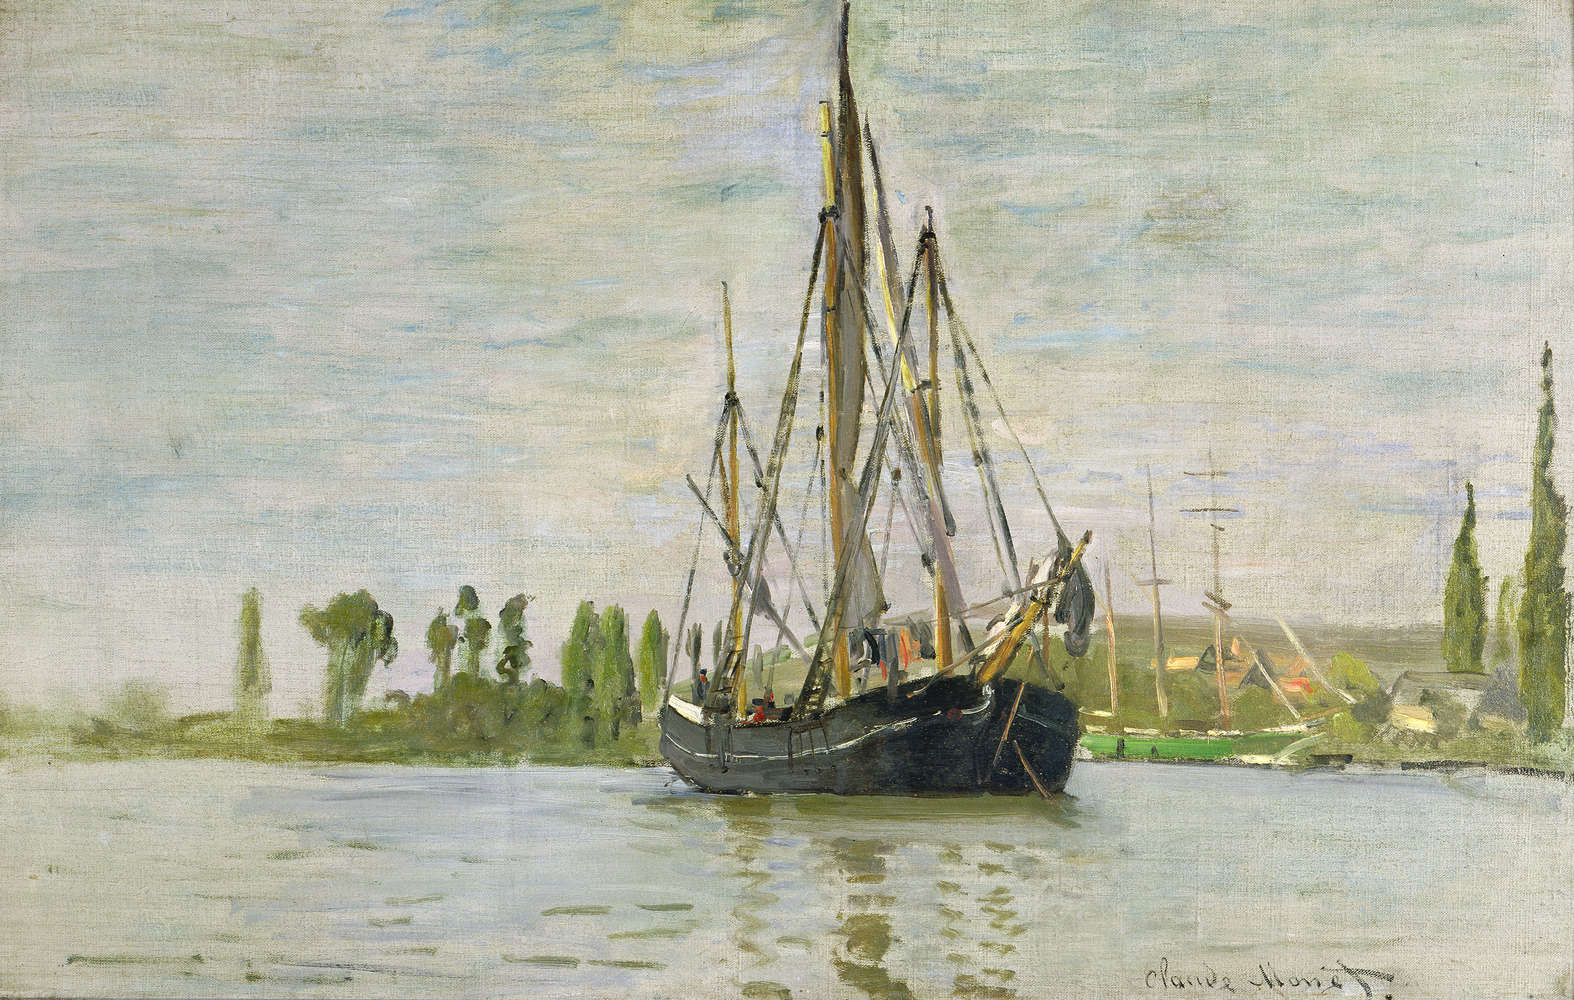             Mural "La Chasse-Marée en el ancla" de Claude Monet
        